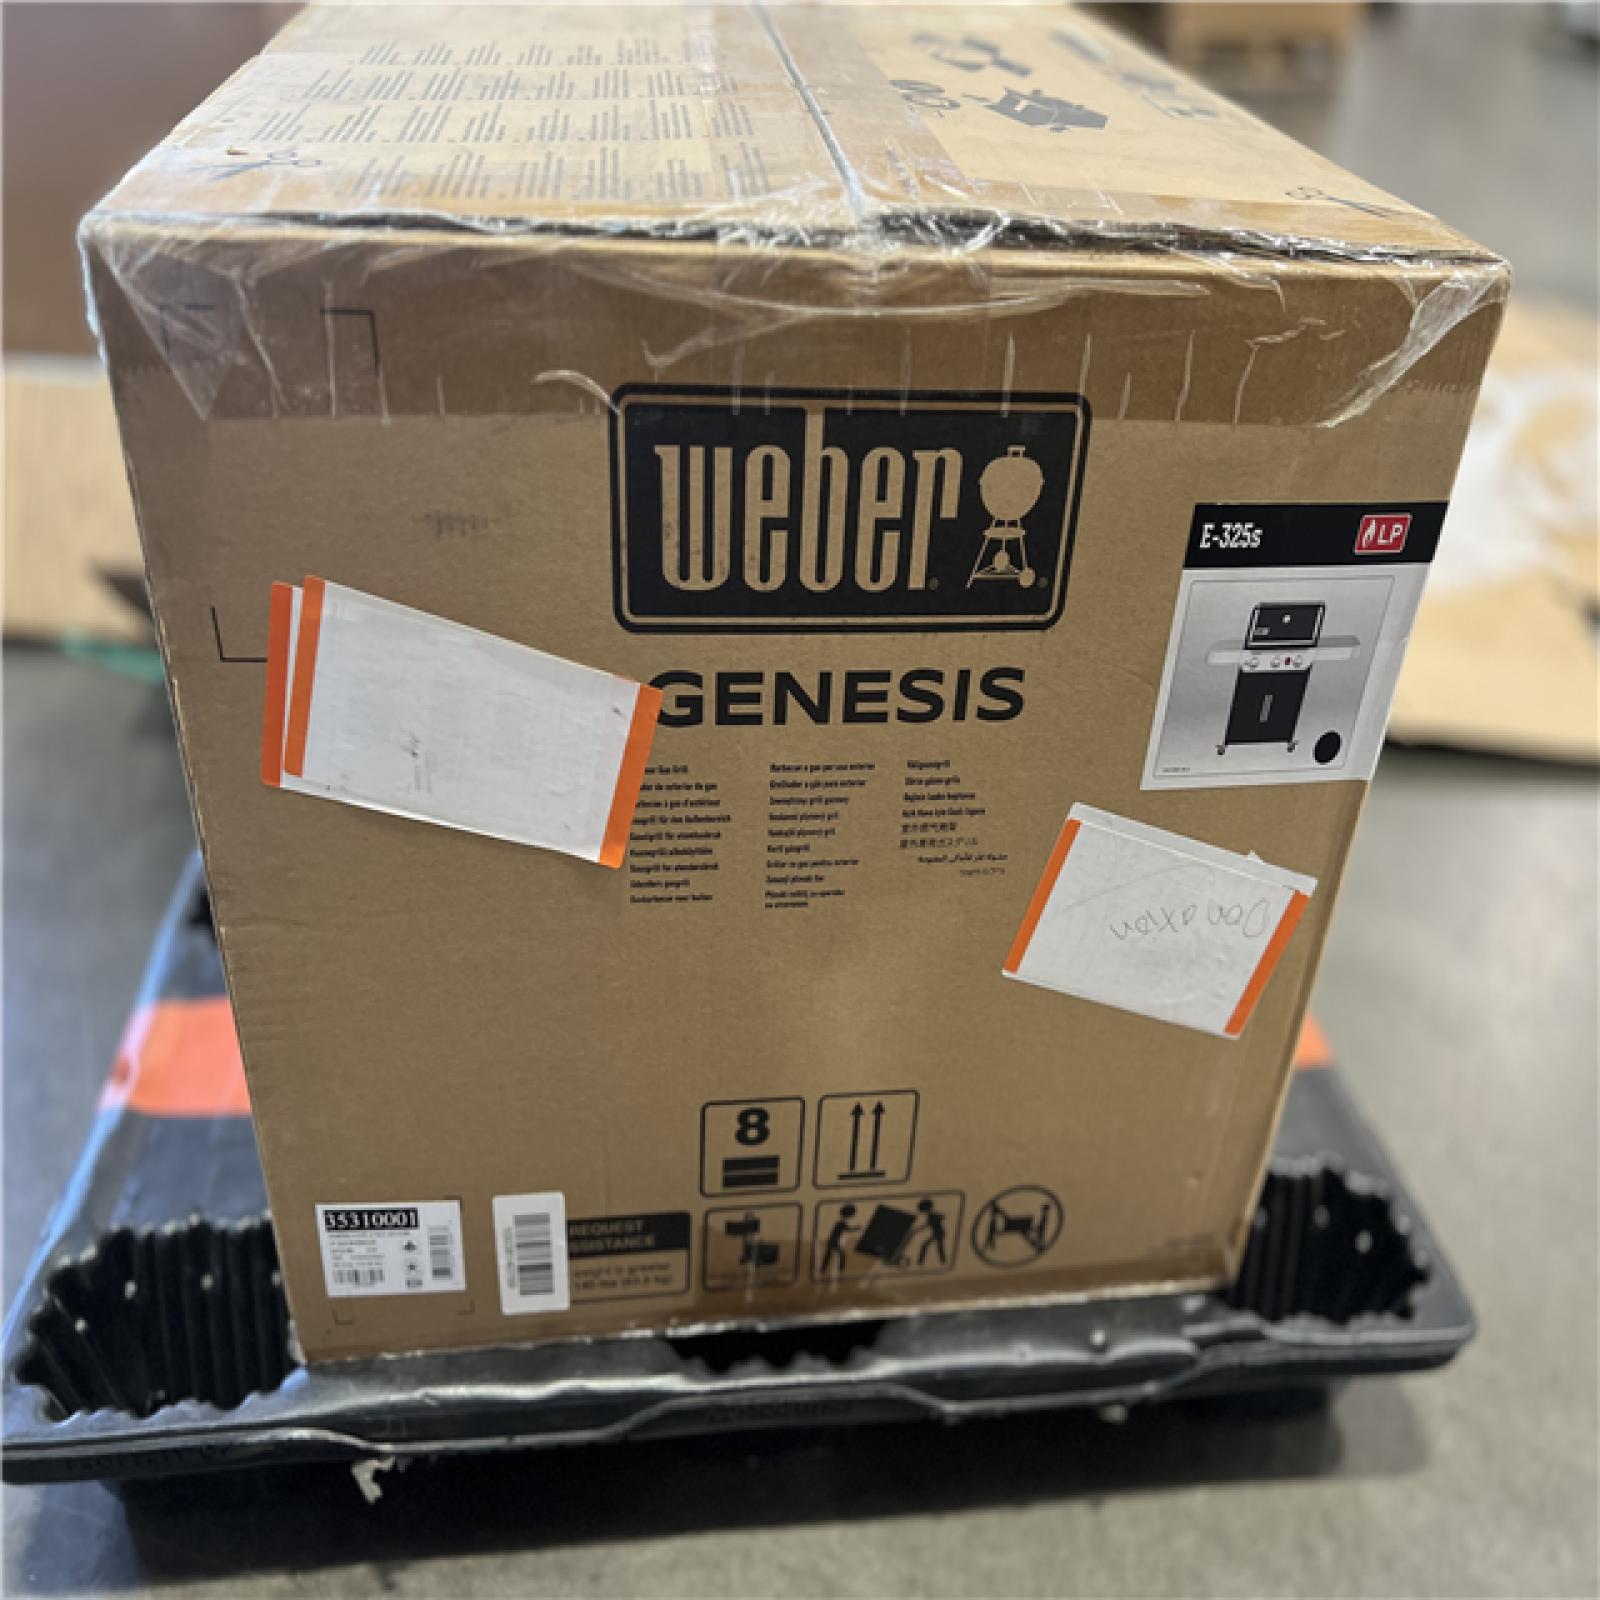 DALLAS LOCATION - Weber Genesis E-325s 3-Burner Liquid Propane Gas Grill in Black with Built-In Thermometer